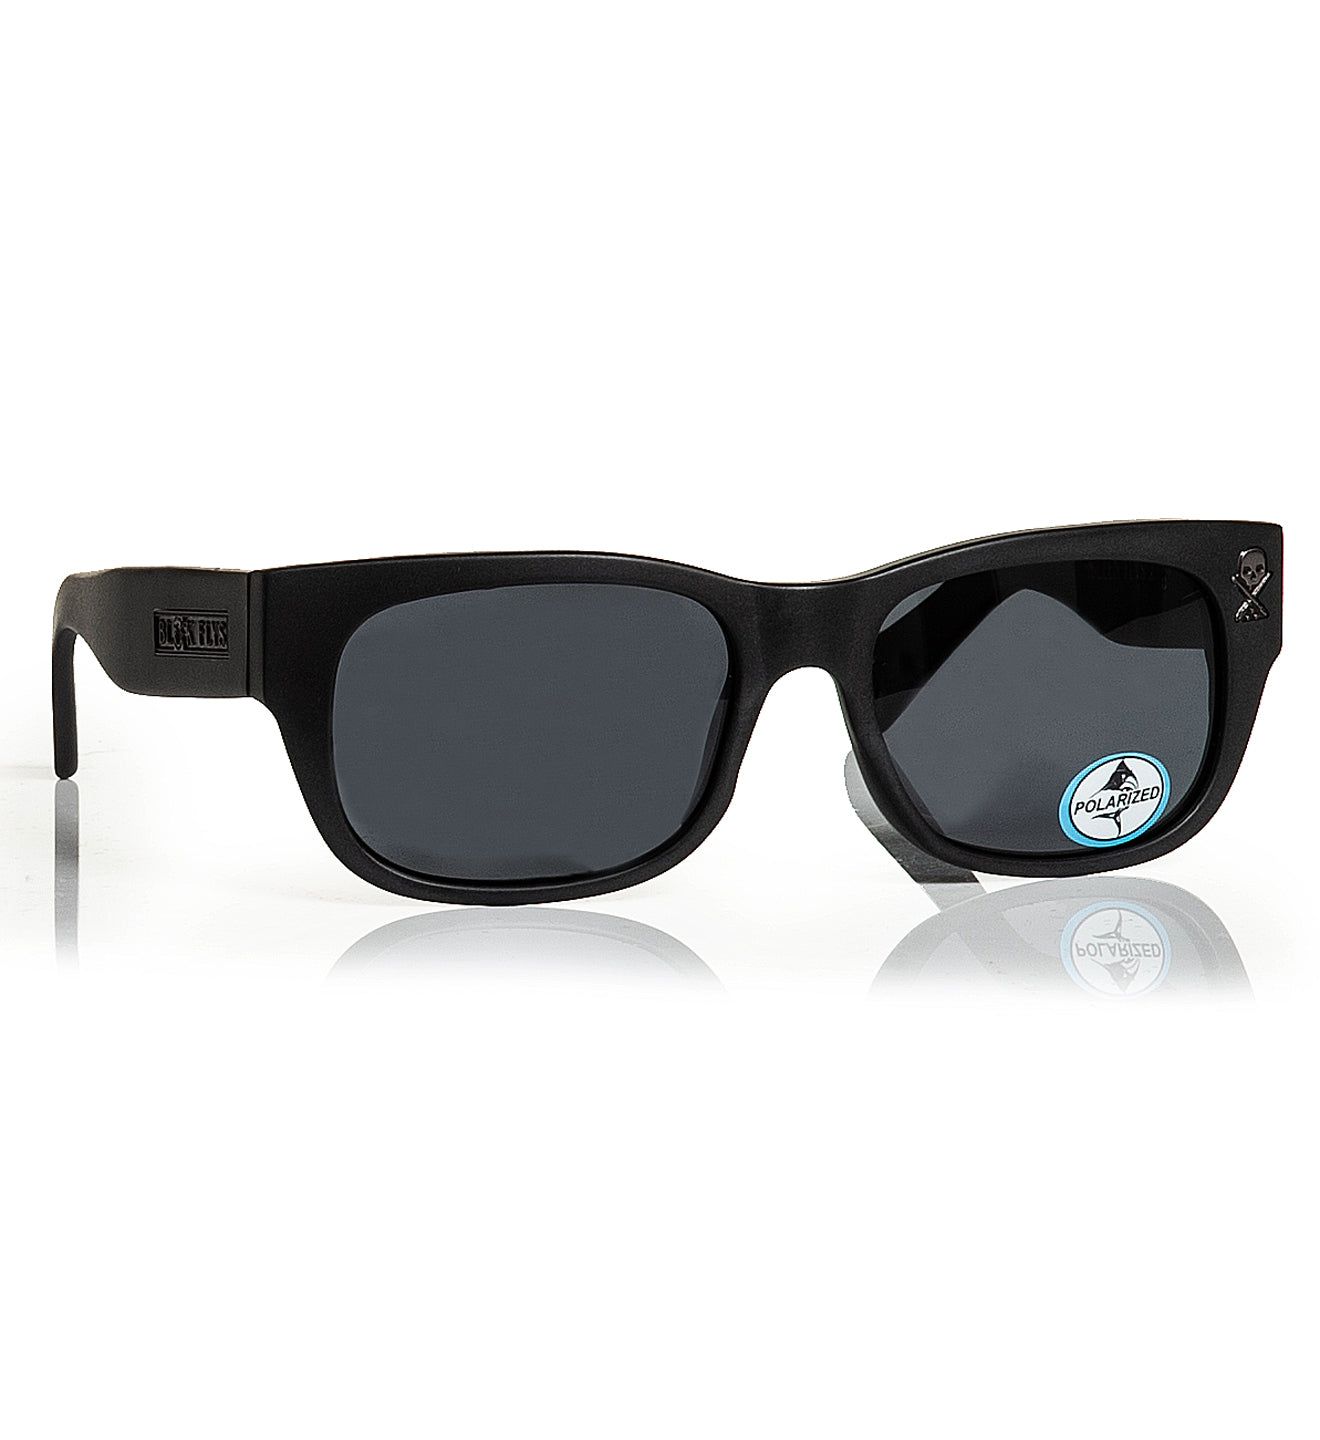 Next Chapter Black Gloss Chrome Polar Sunglasses - 